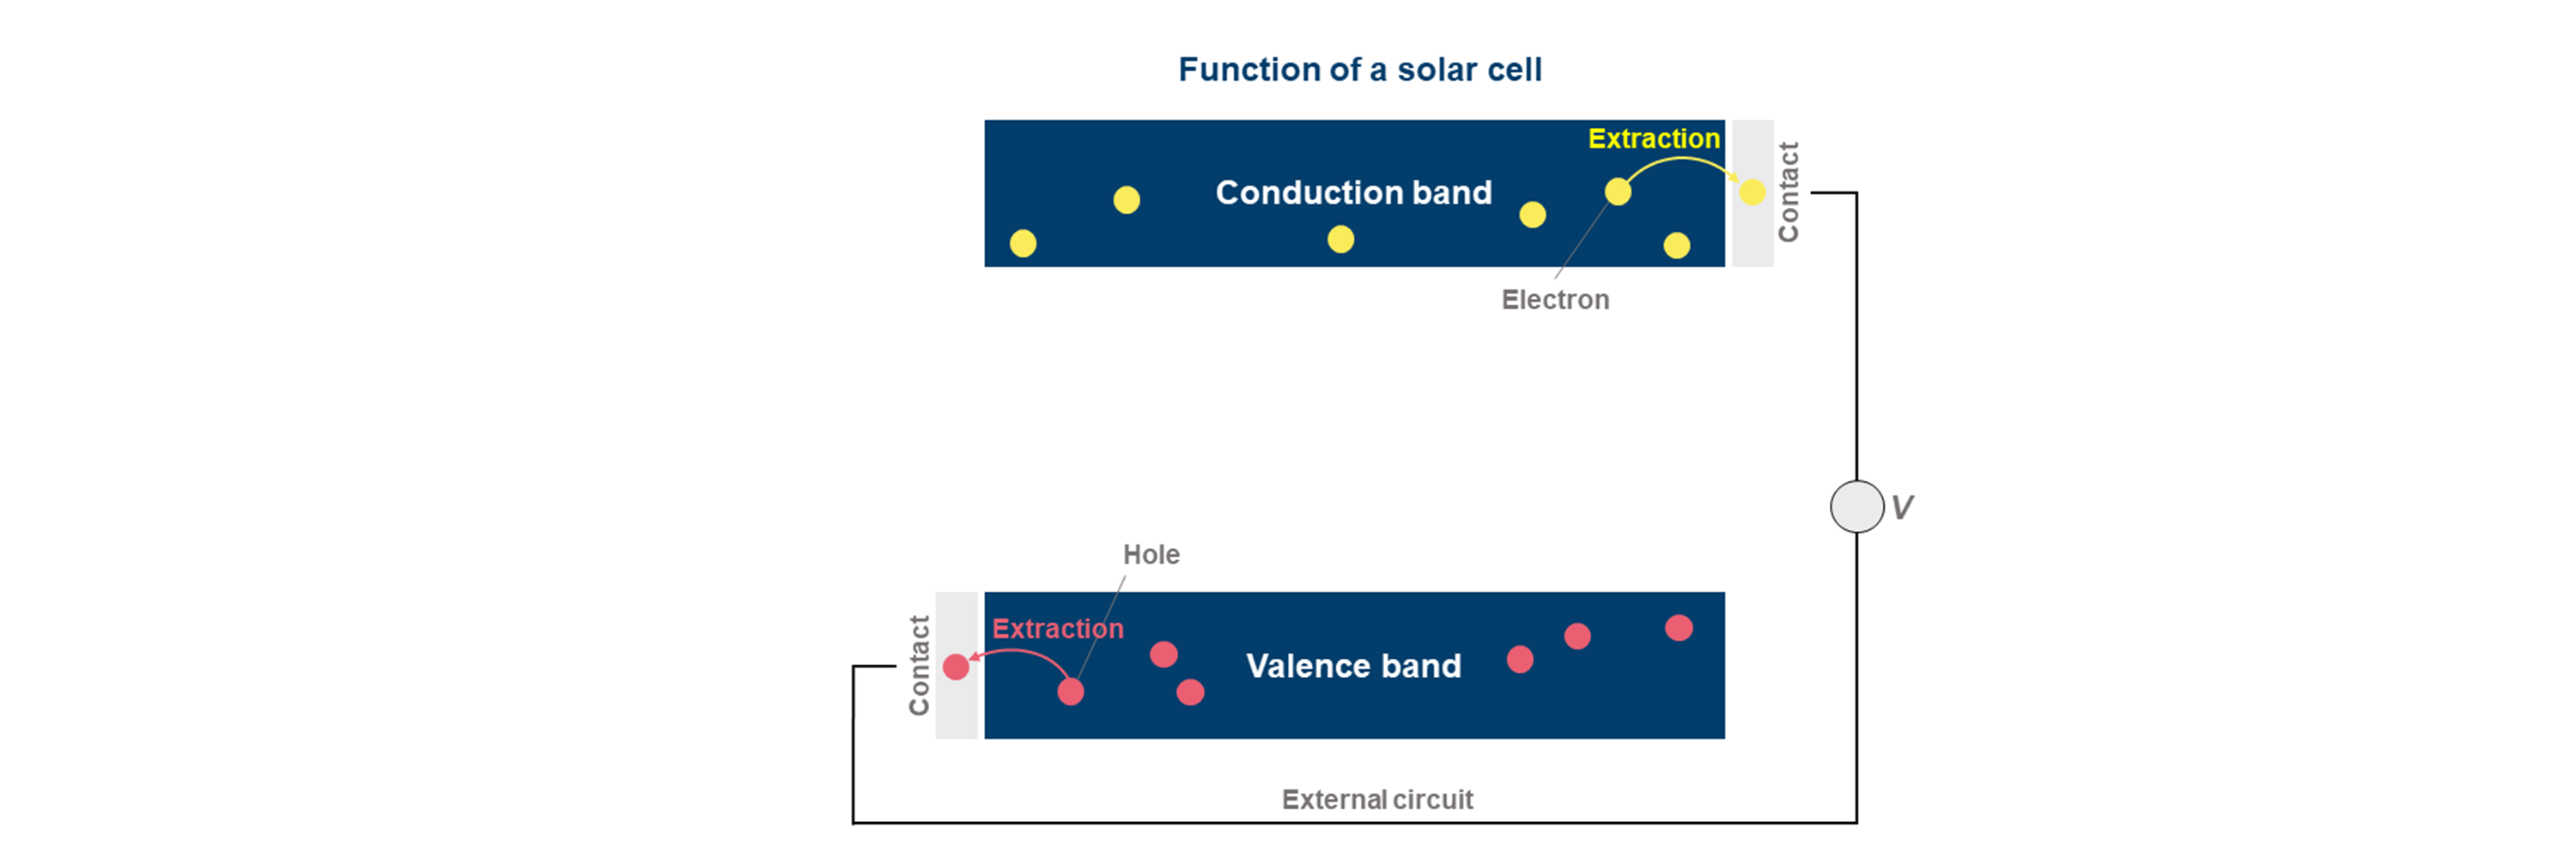 New Findings Regarding the High Efficiency of Perovskite Solar Cells